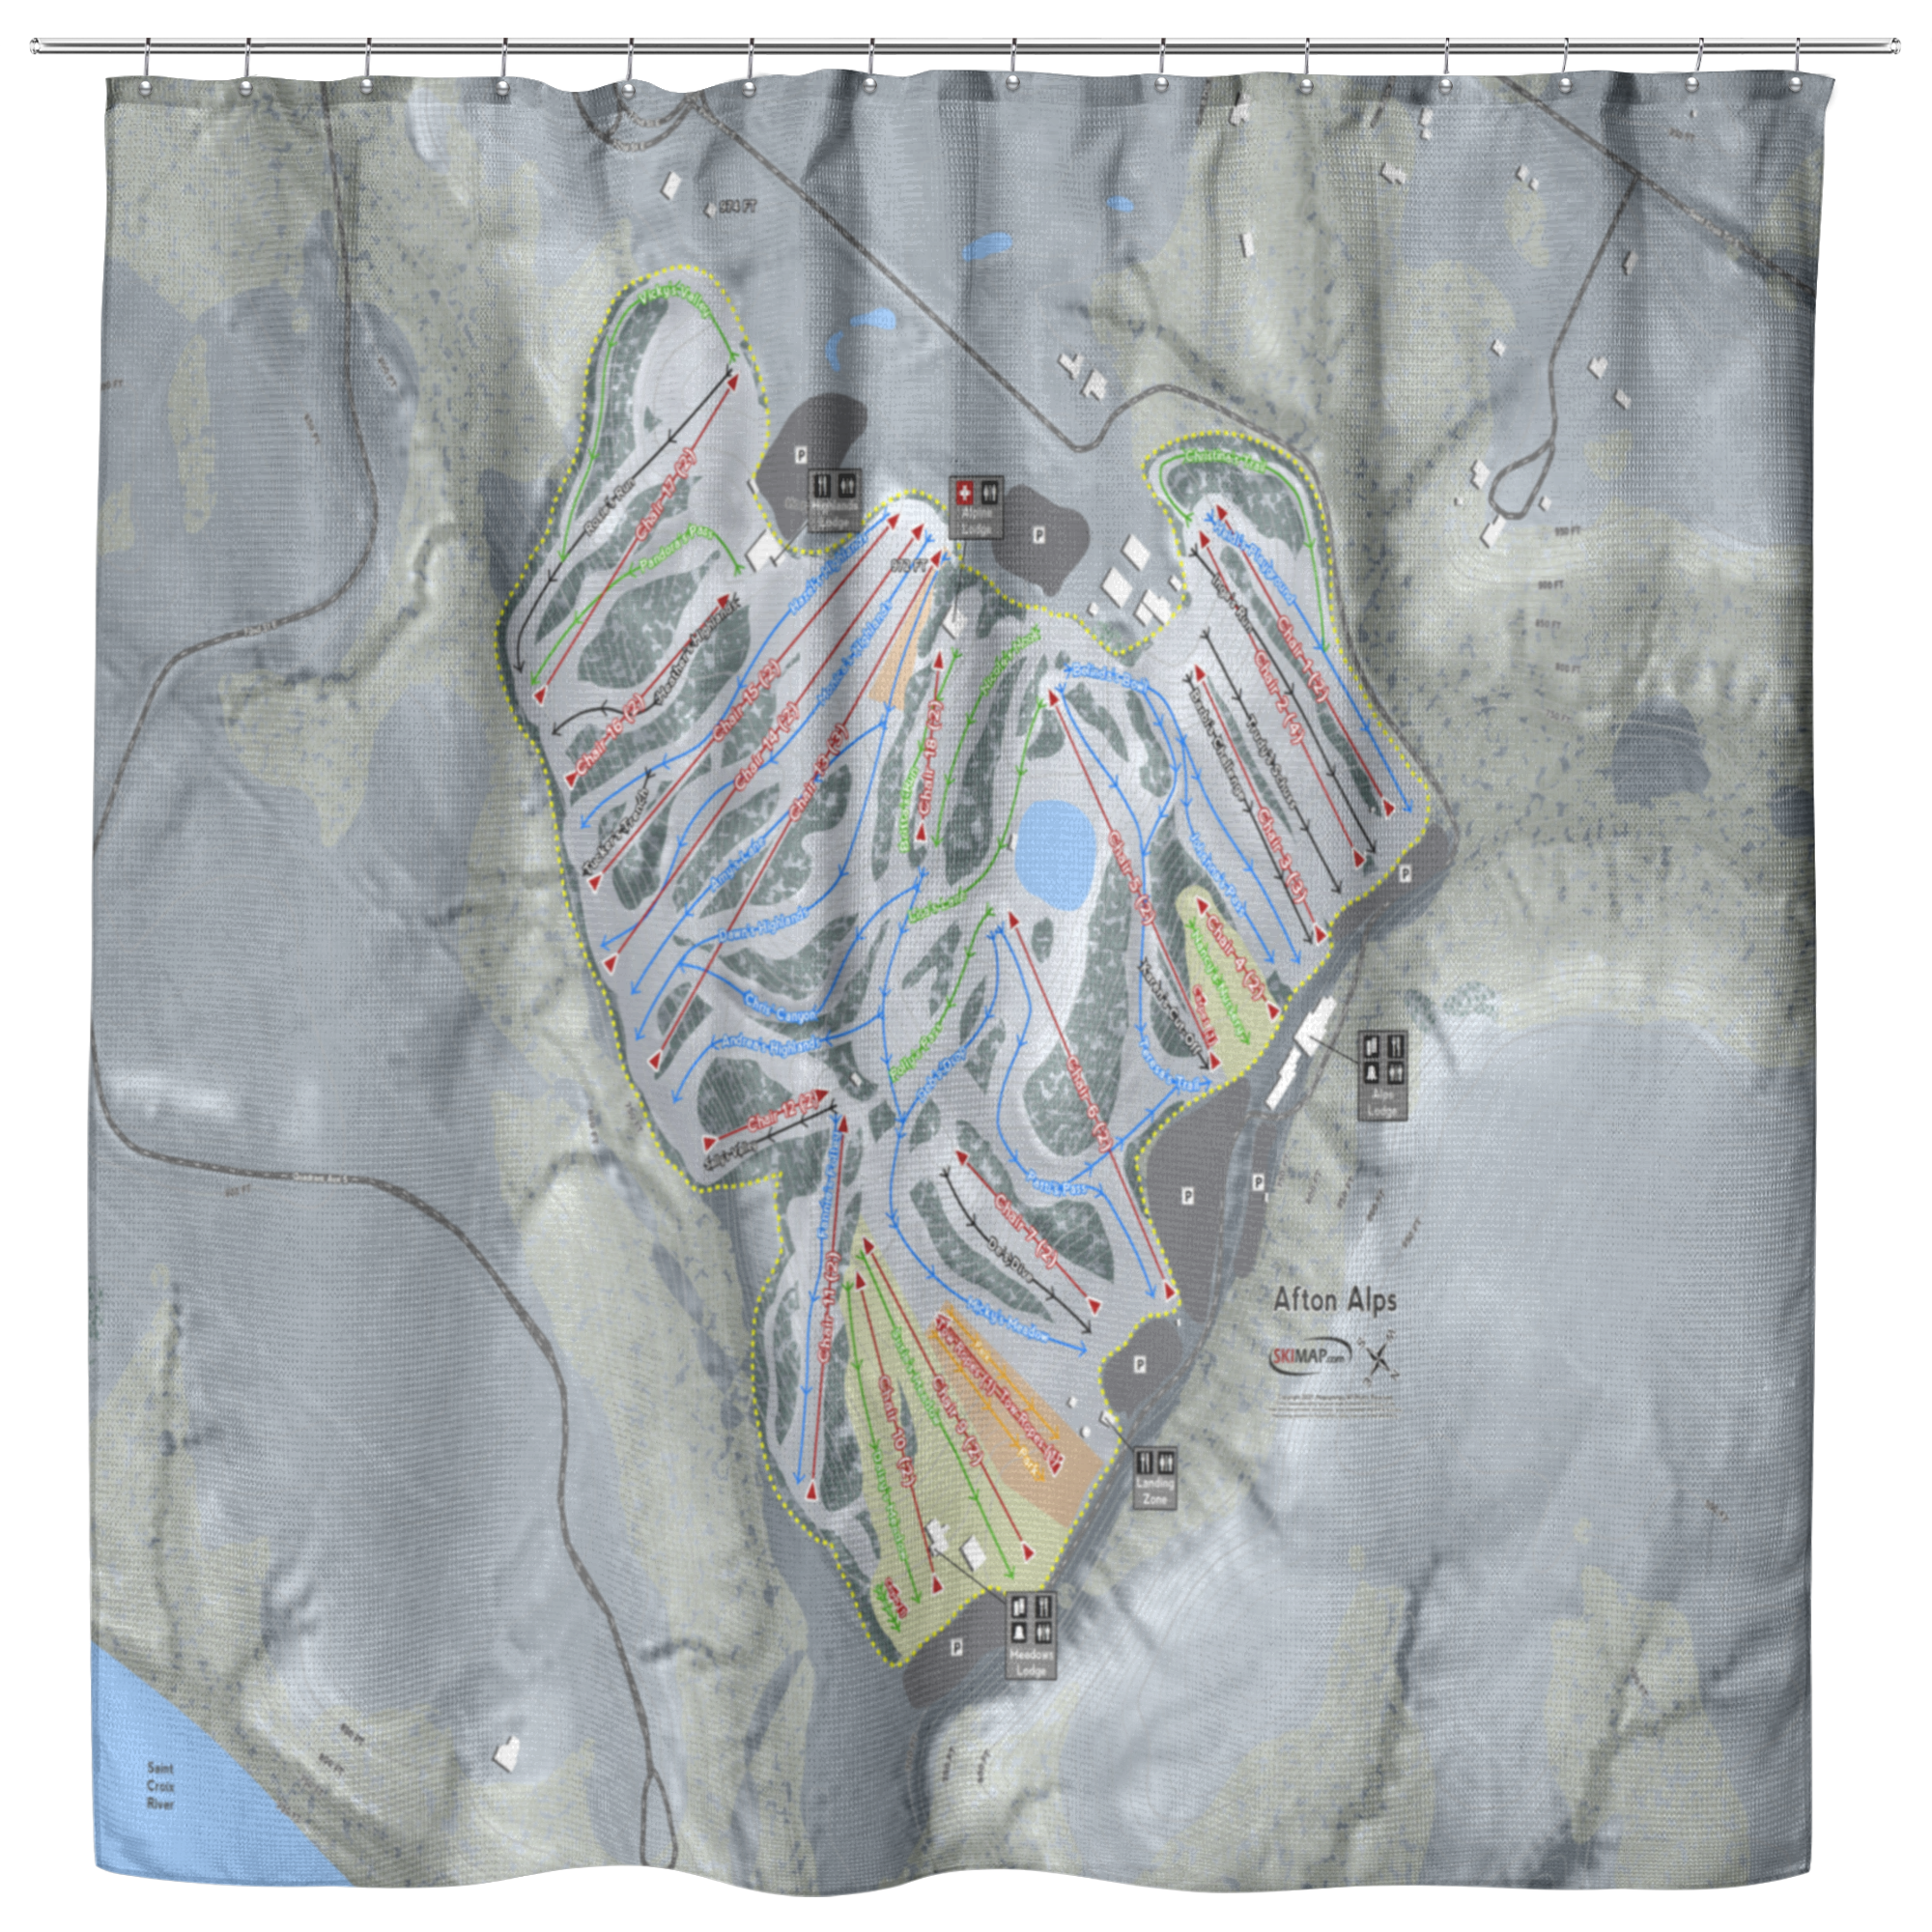 Afton Alps Ski Trail Map Shower Curtain - Powderaddicts